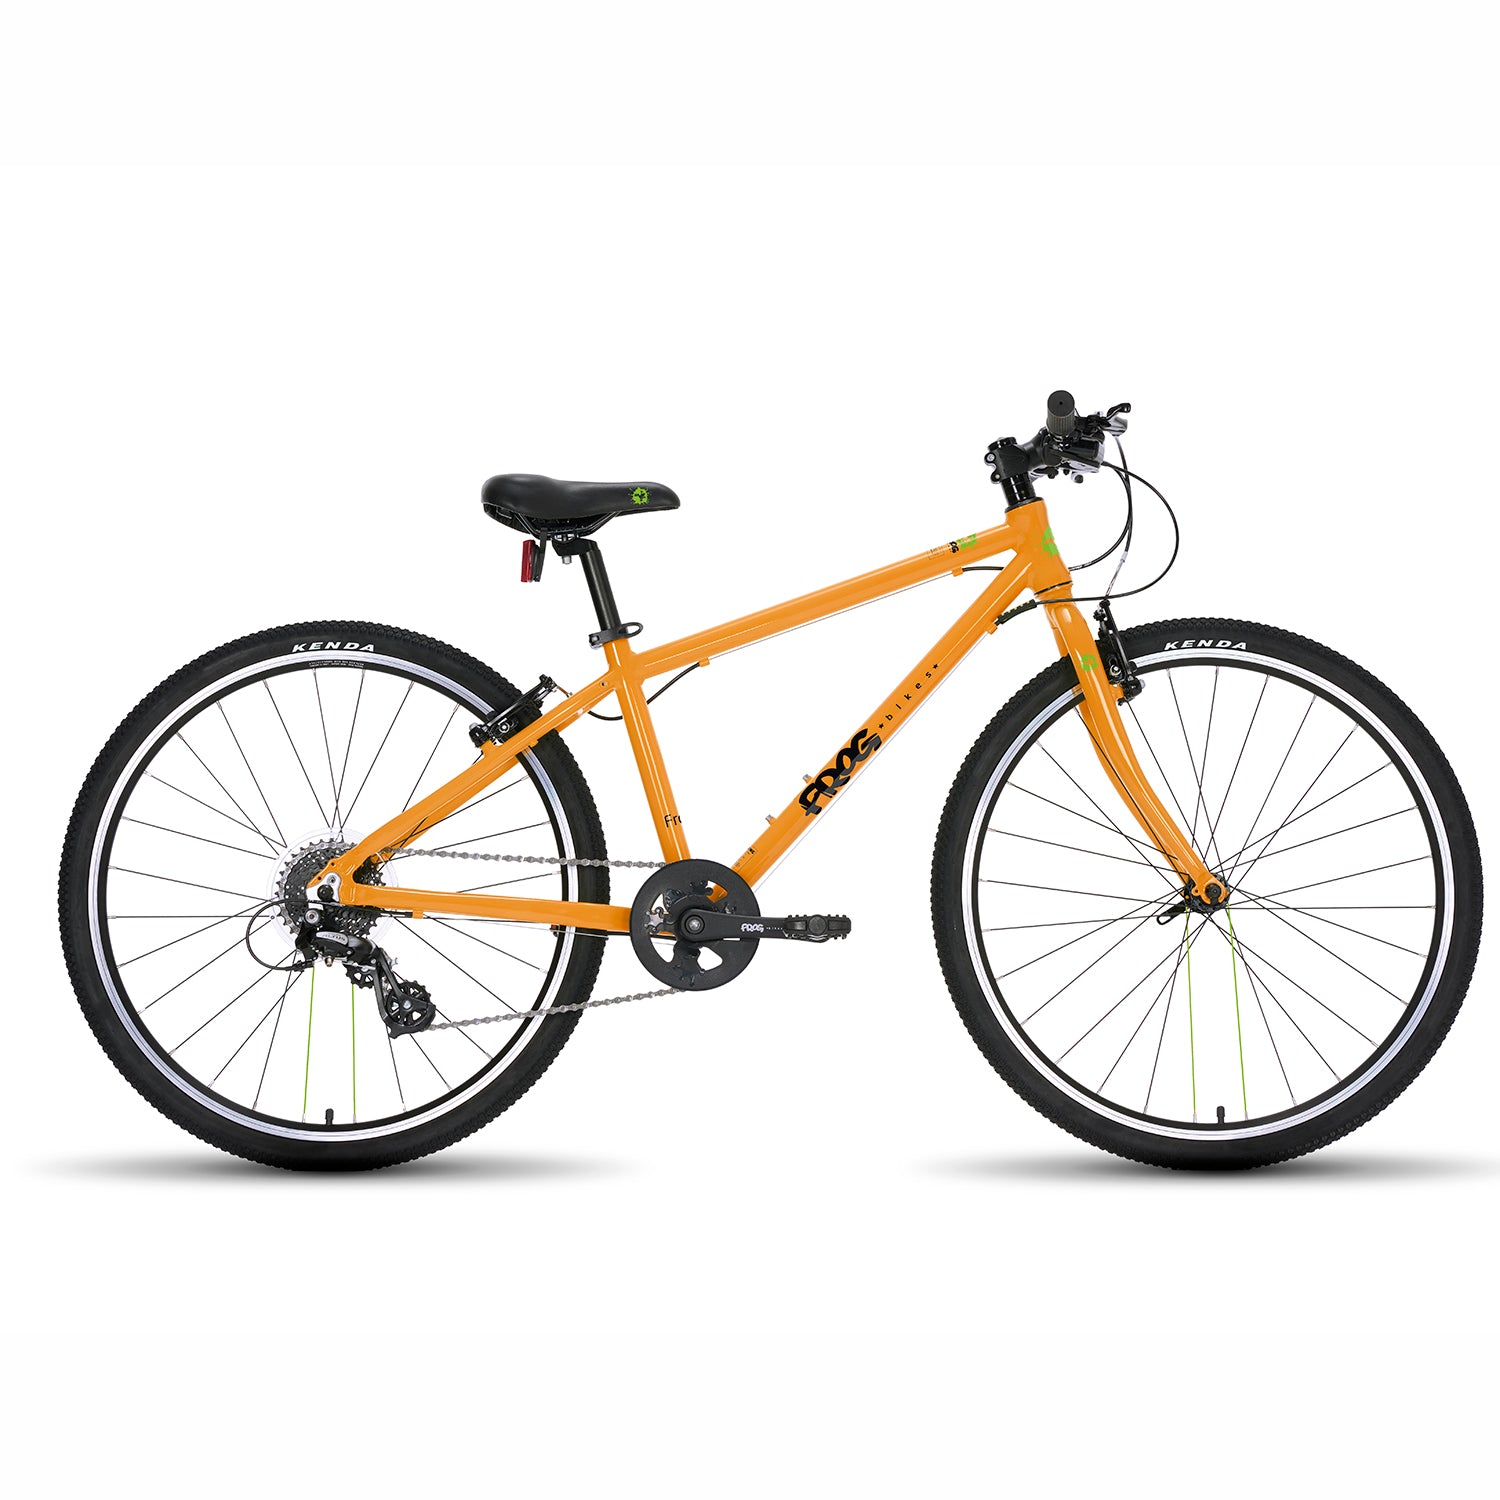 Frog 69 Lightweight Youth Hybrid Bike - Orange